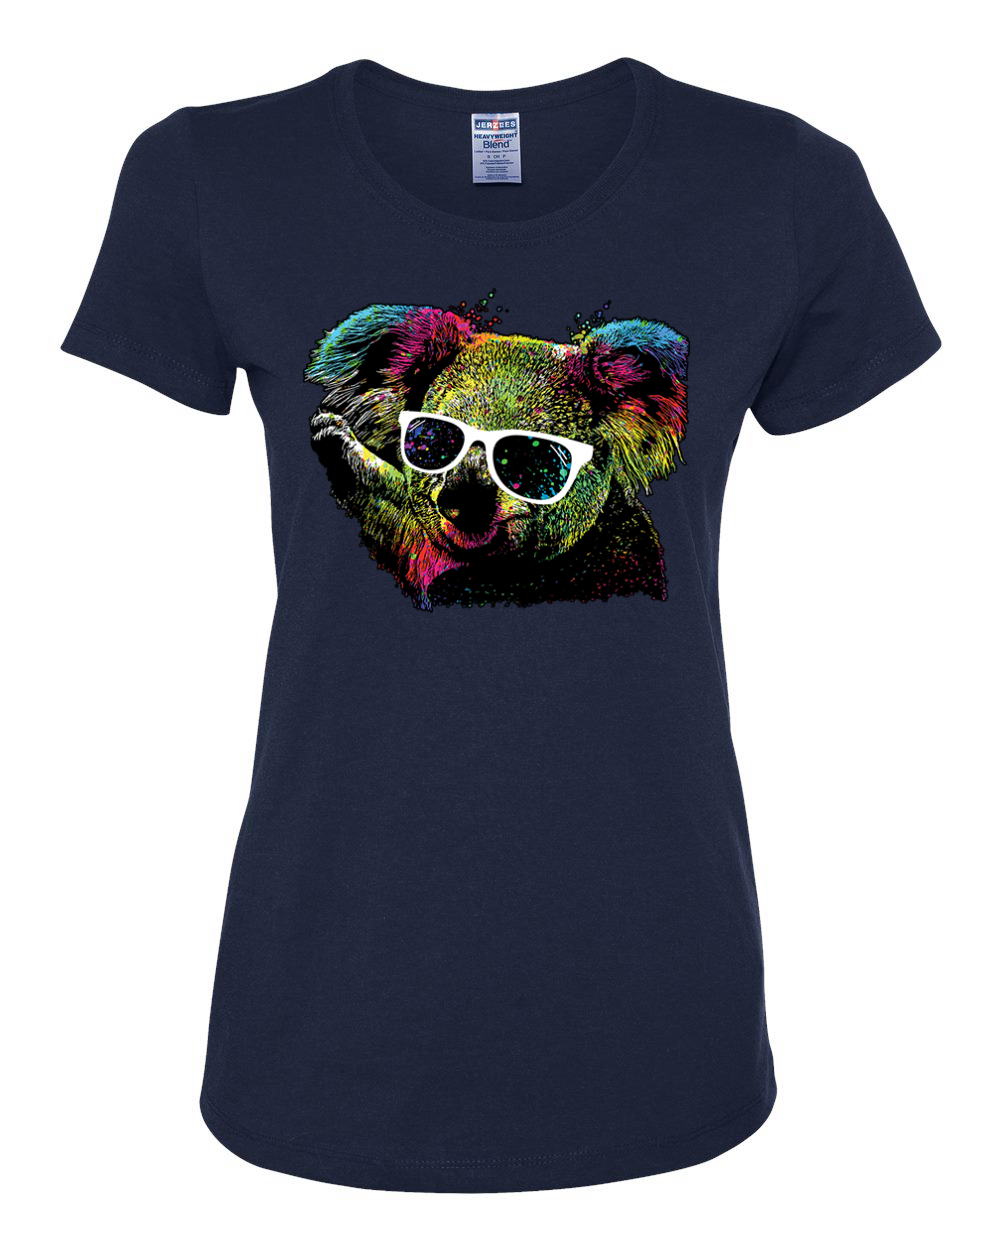 Neon Technicolor Trippy Party Rainbow Koala | Womens Animal Lover Graphic T-Shirt, Navy, Medium - image 2 of 4